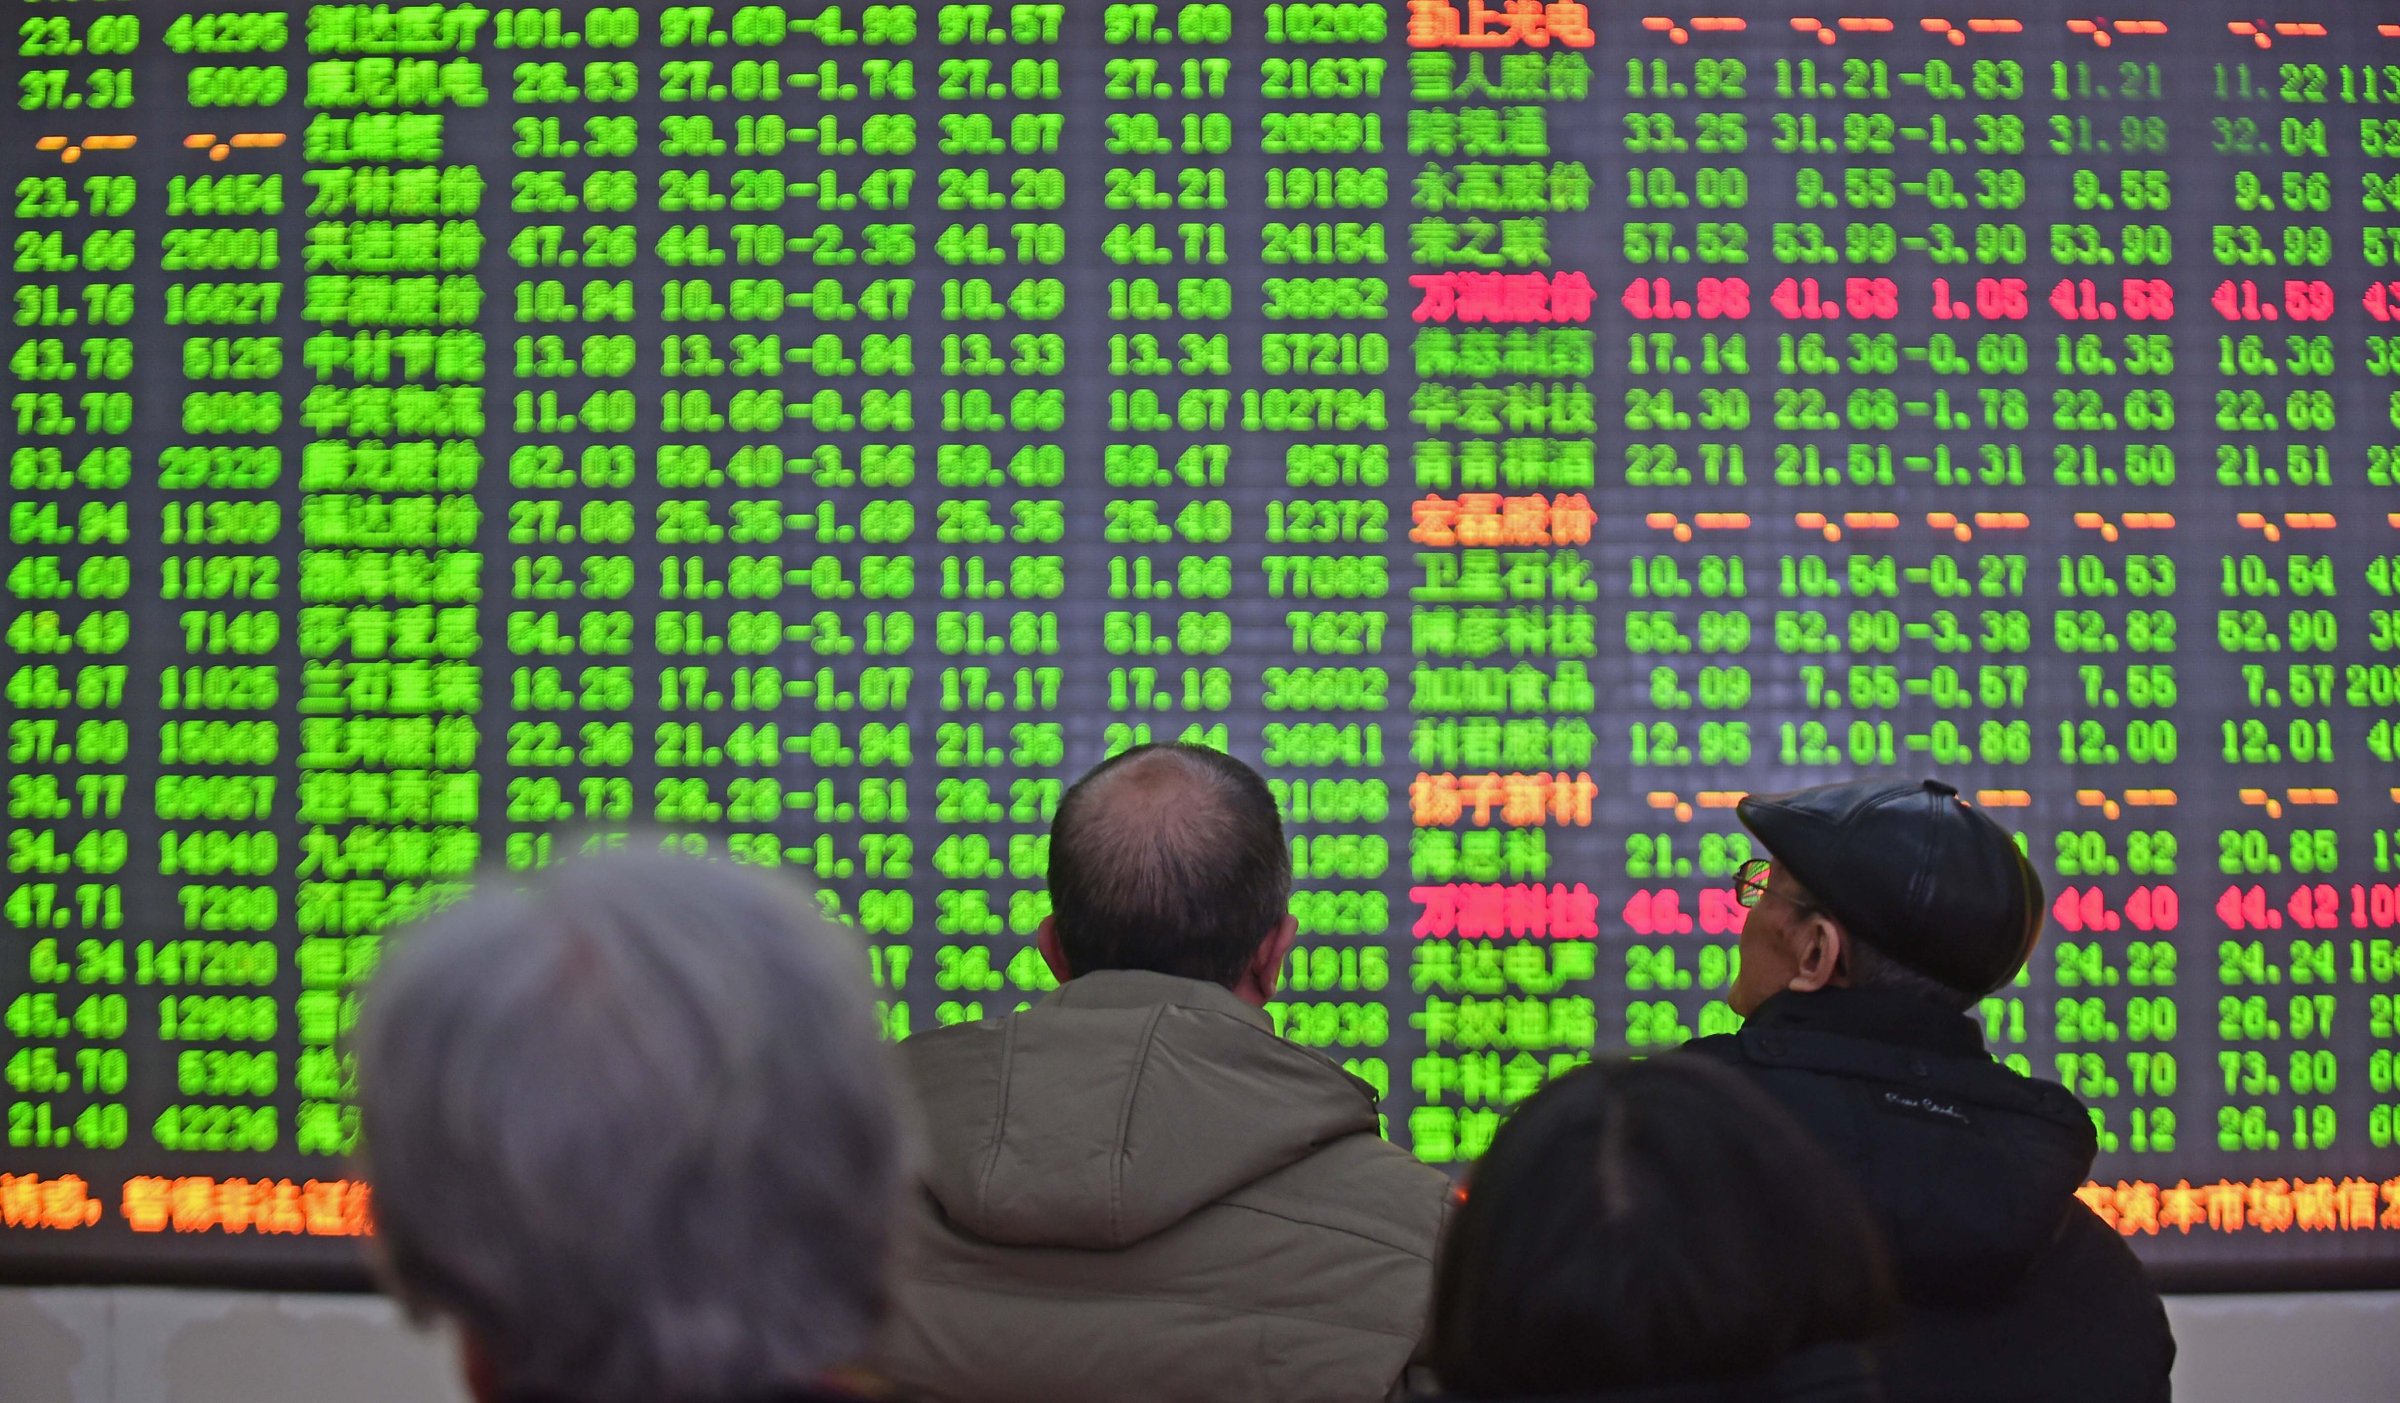 Investors look through stock information at a trading hall in Shenyang, China on Jan. 4, 2016.